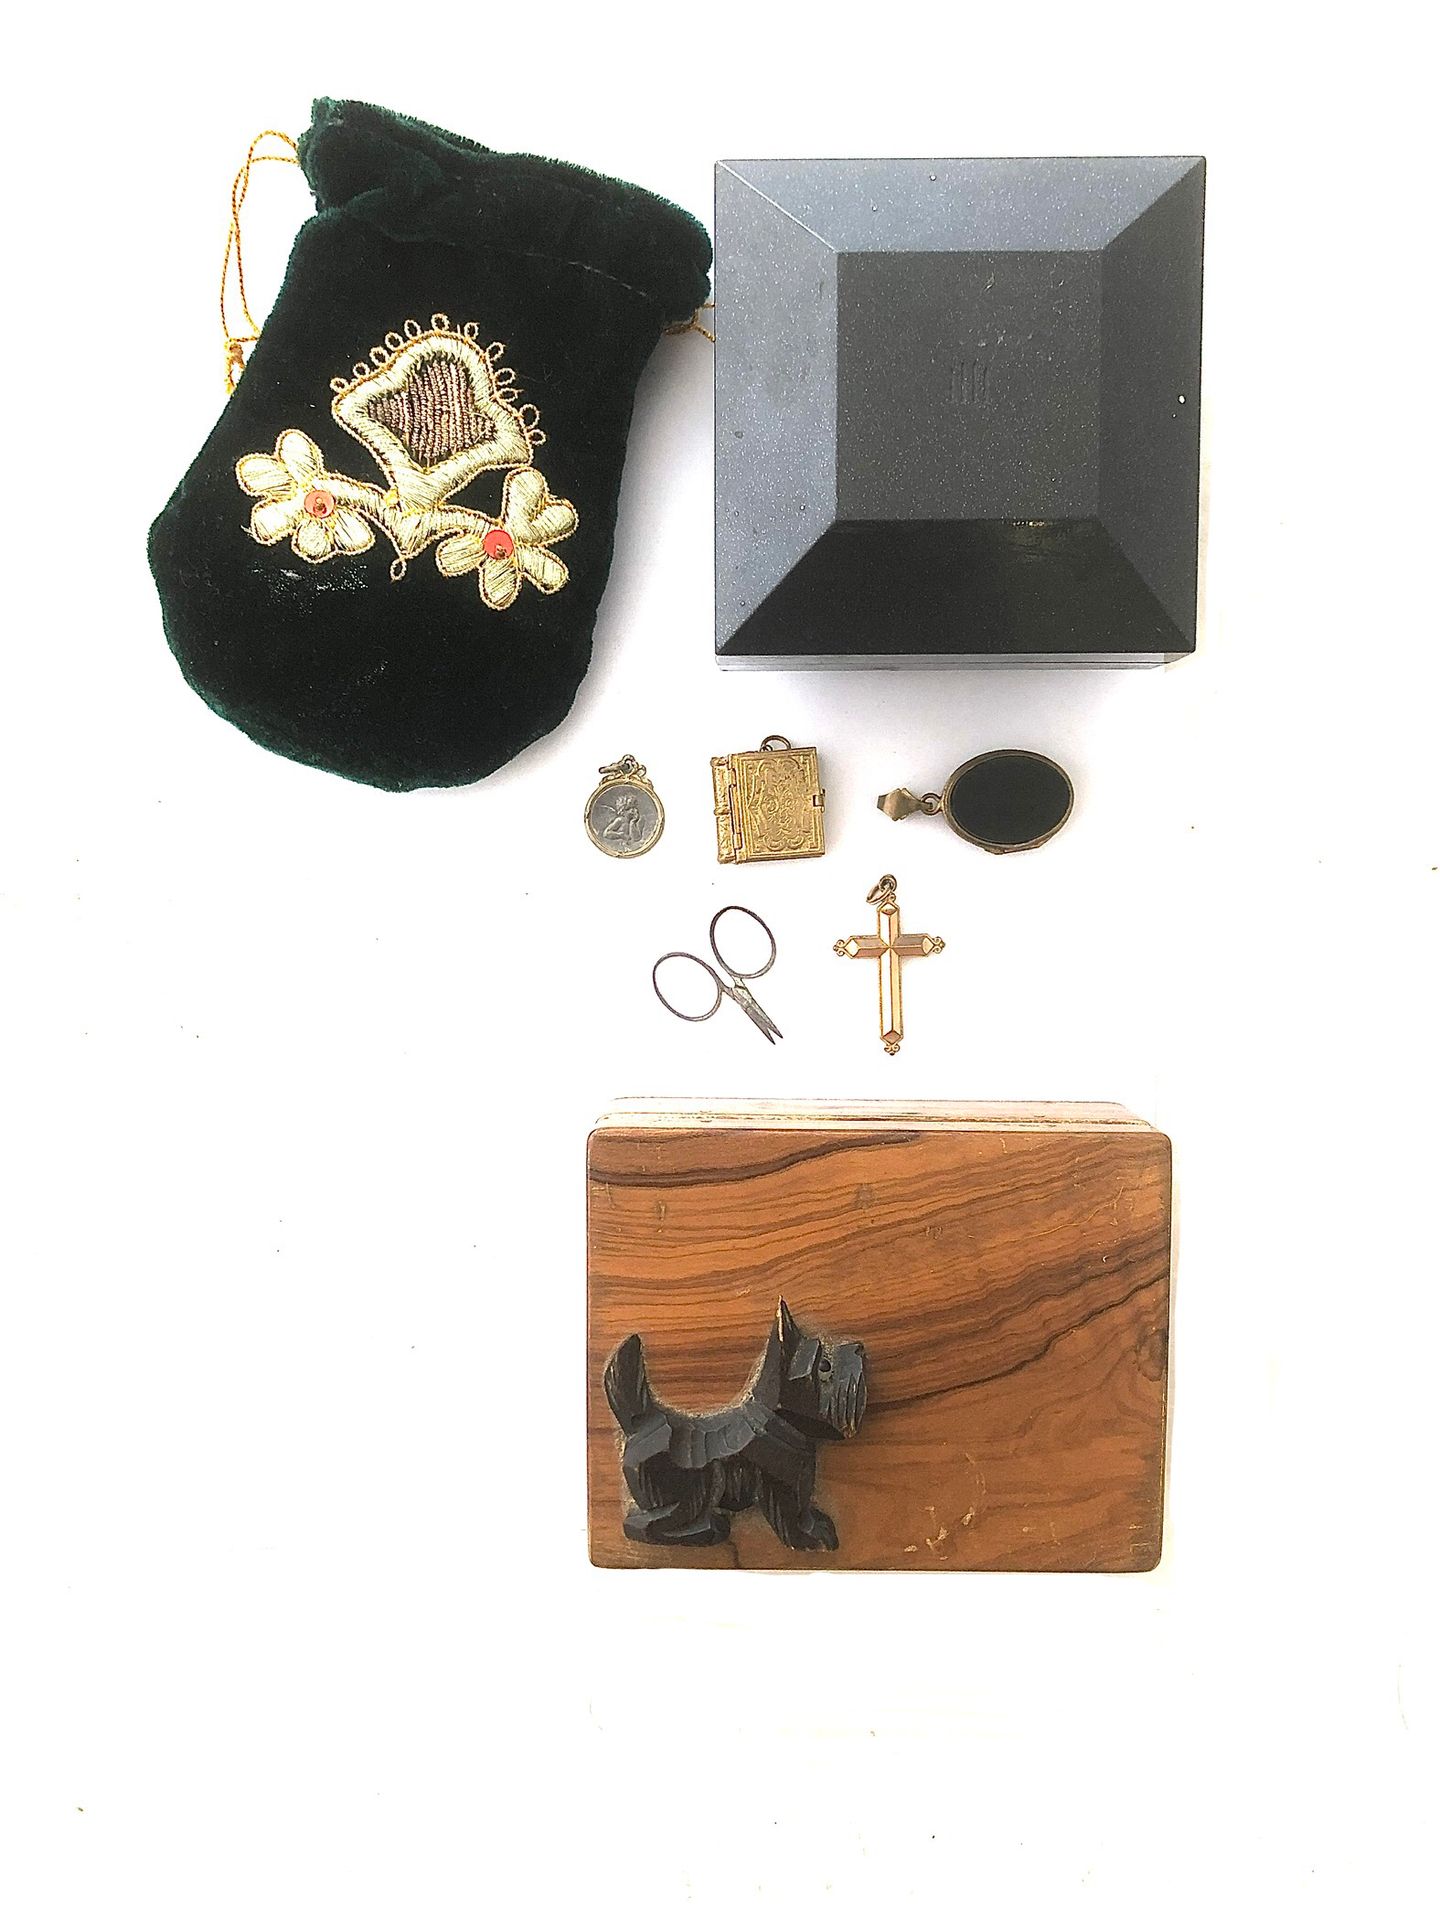 Null 一套20世纪初的服装和高级时装珠宝，装在一个有趣的有狗图案的木盒里，包括胸针、吊坠和上链口袋表的钥匙....，以及一个带卢尔德朝圣纪念品架的吊坠，一个&hellip;